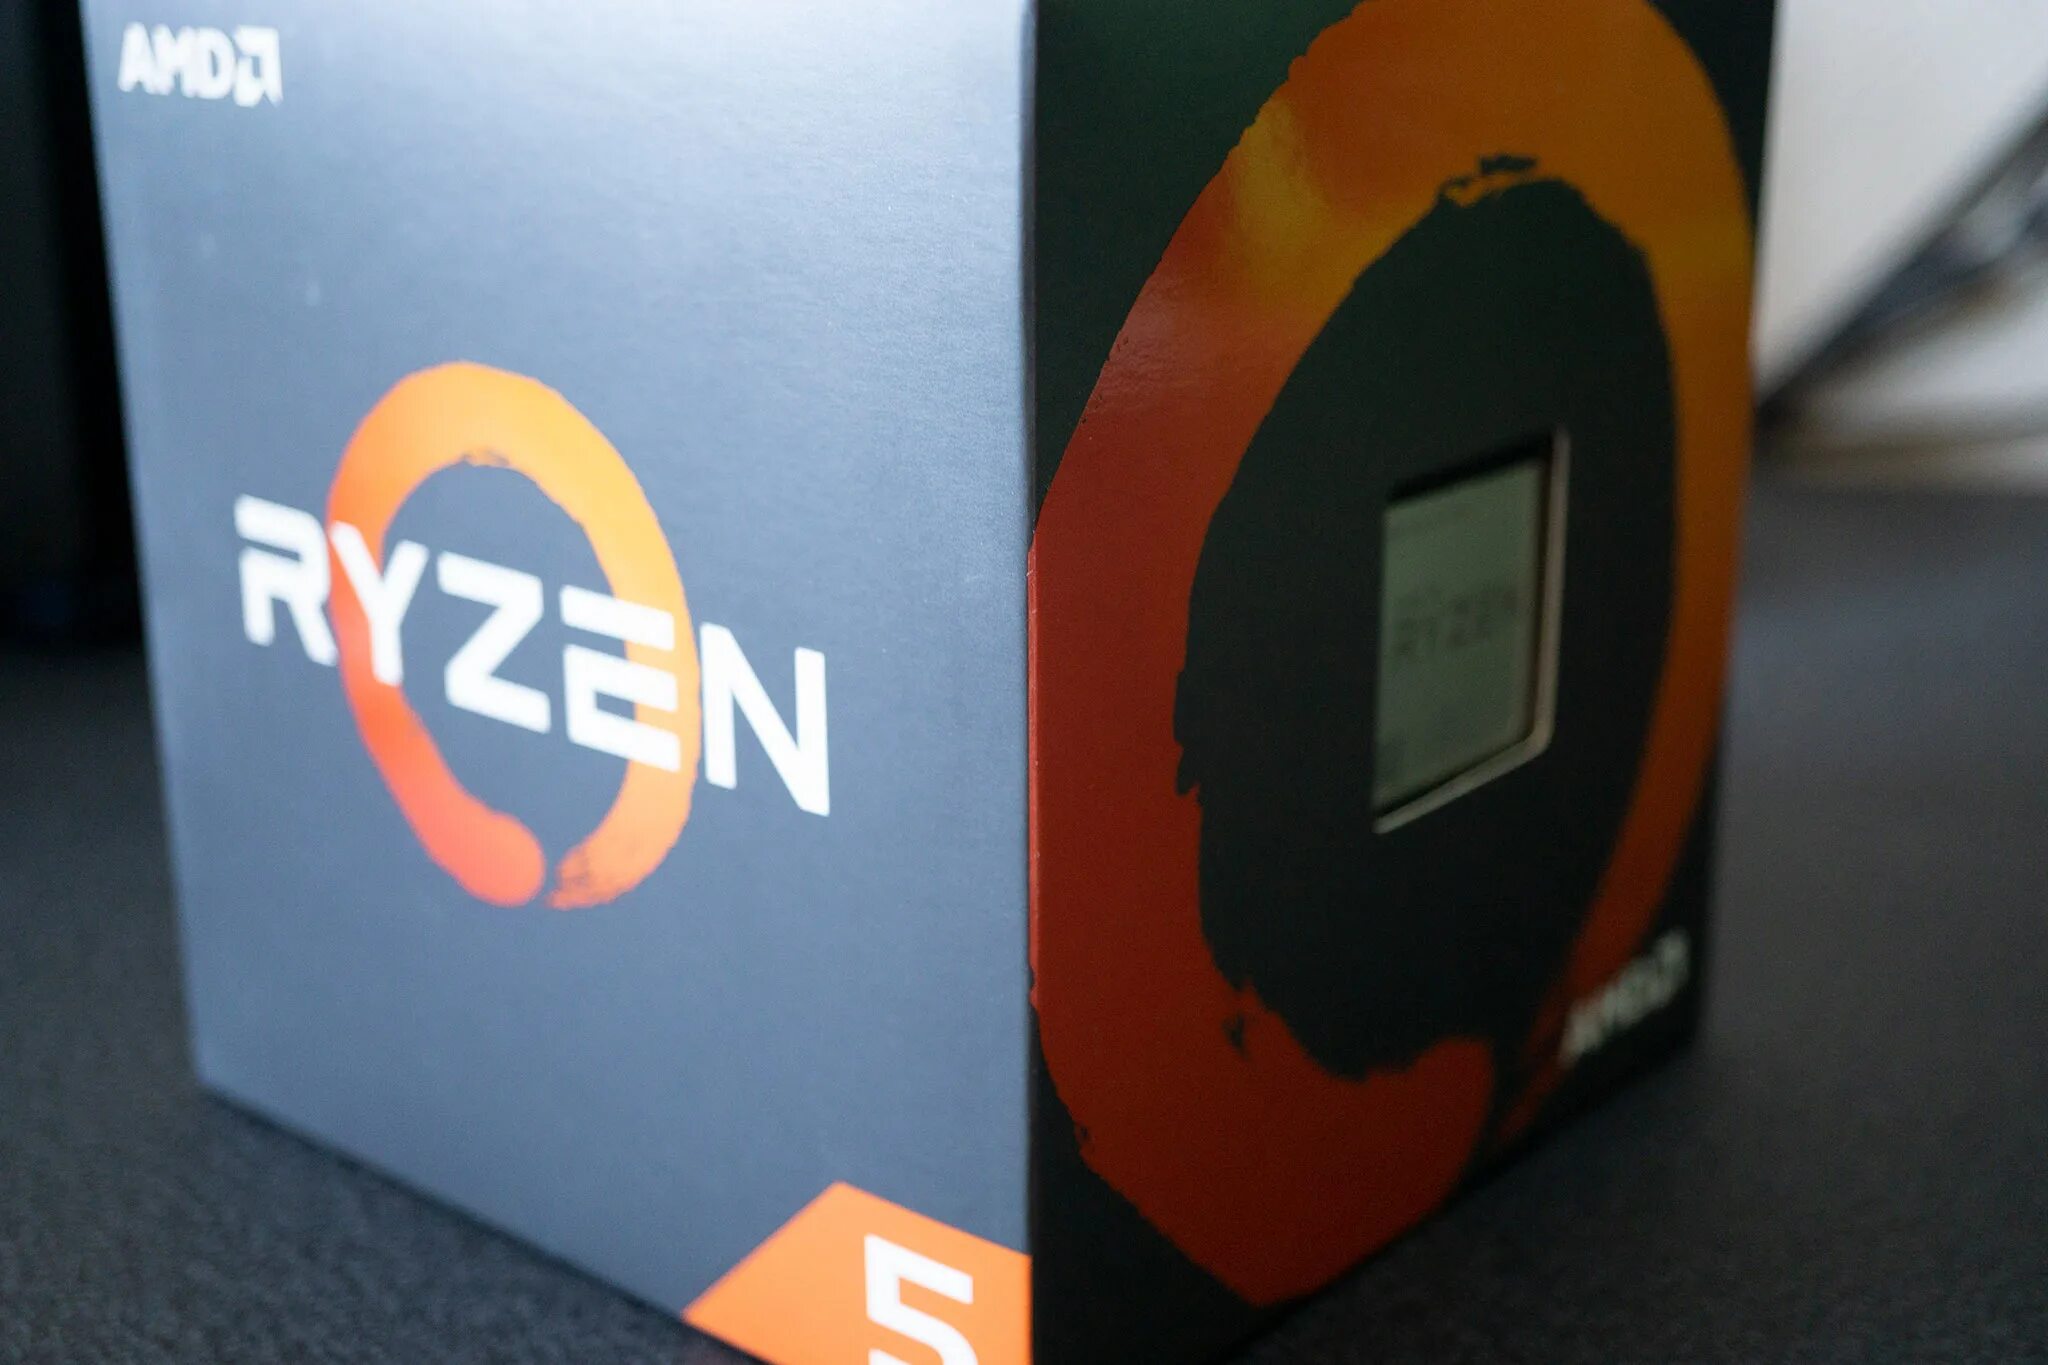 Ryzen 5 2600 память. AMD Ryzen 5 2600. AMD Ryzen 5 2600 (Box). Ryzen 5 3600x. AMD Ryzen 5 3600 Box.